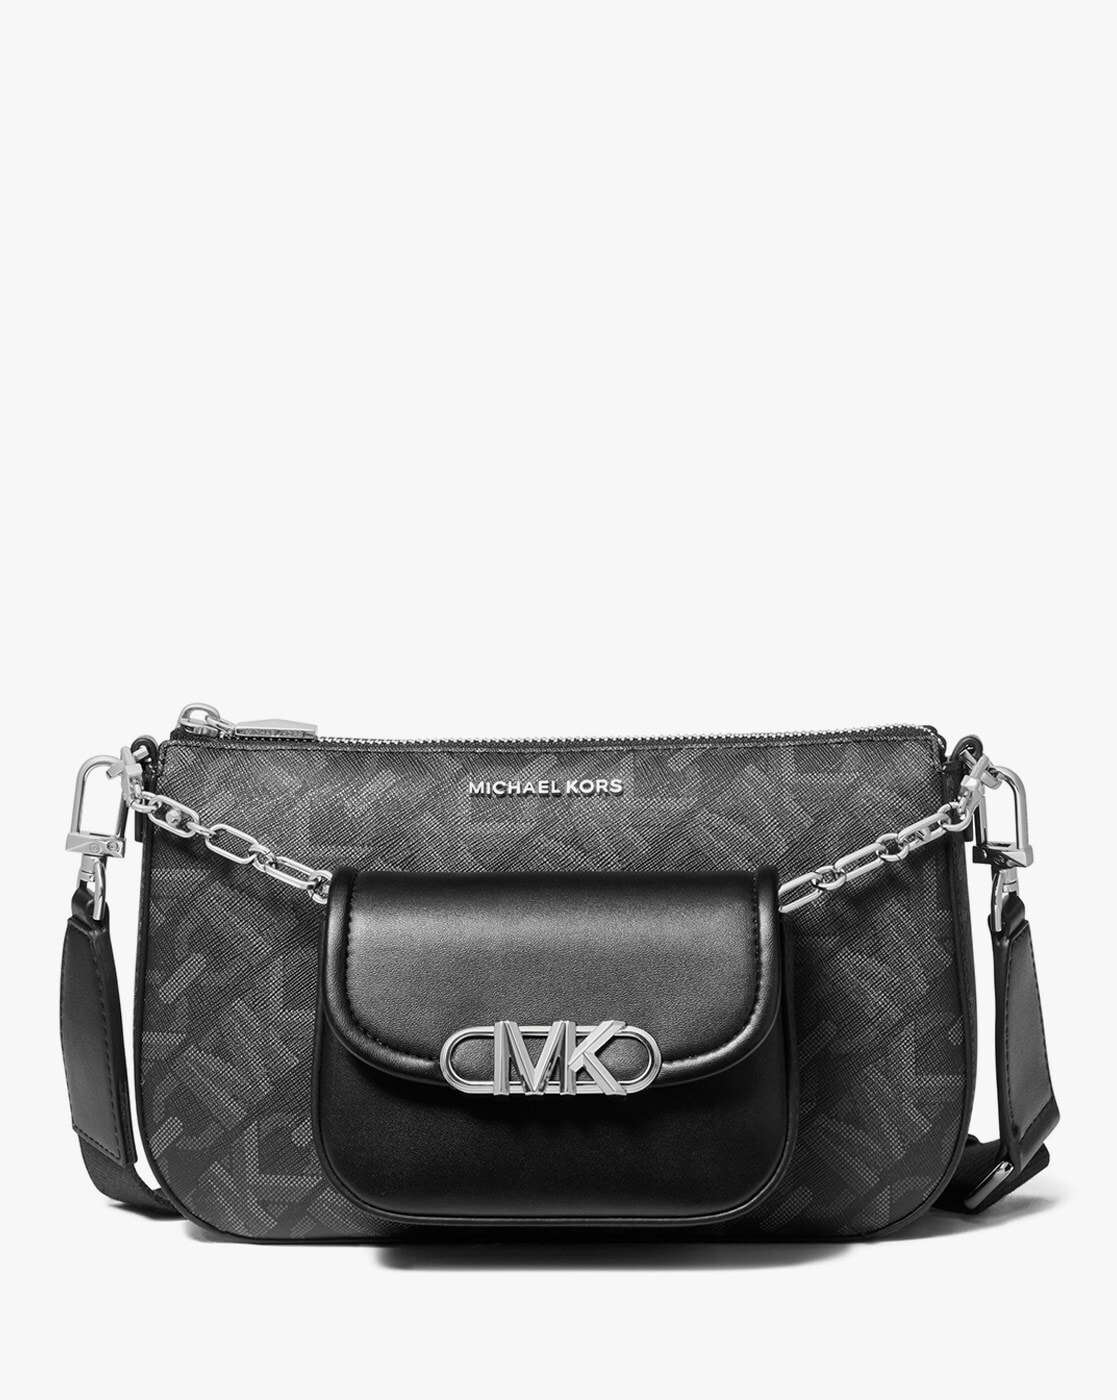 Michael Kors Cece Chain Small Shoulder Bag Crossbody Purse Handbag  Messenger | eBay